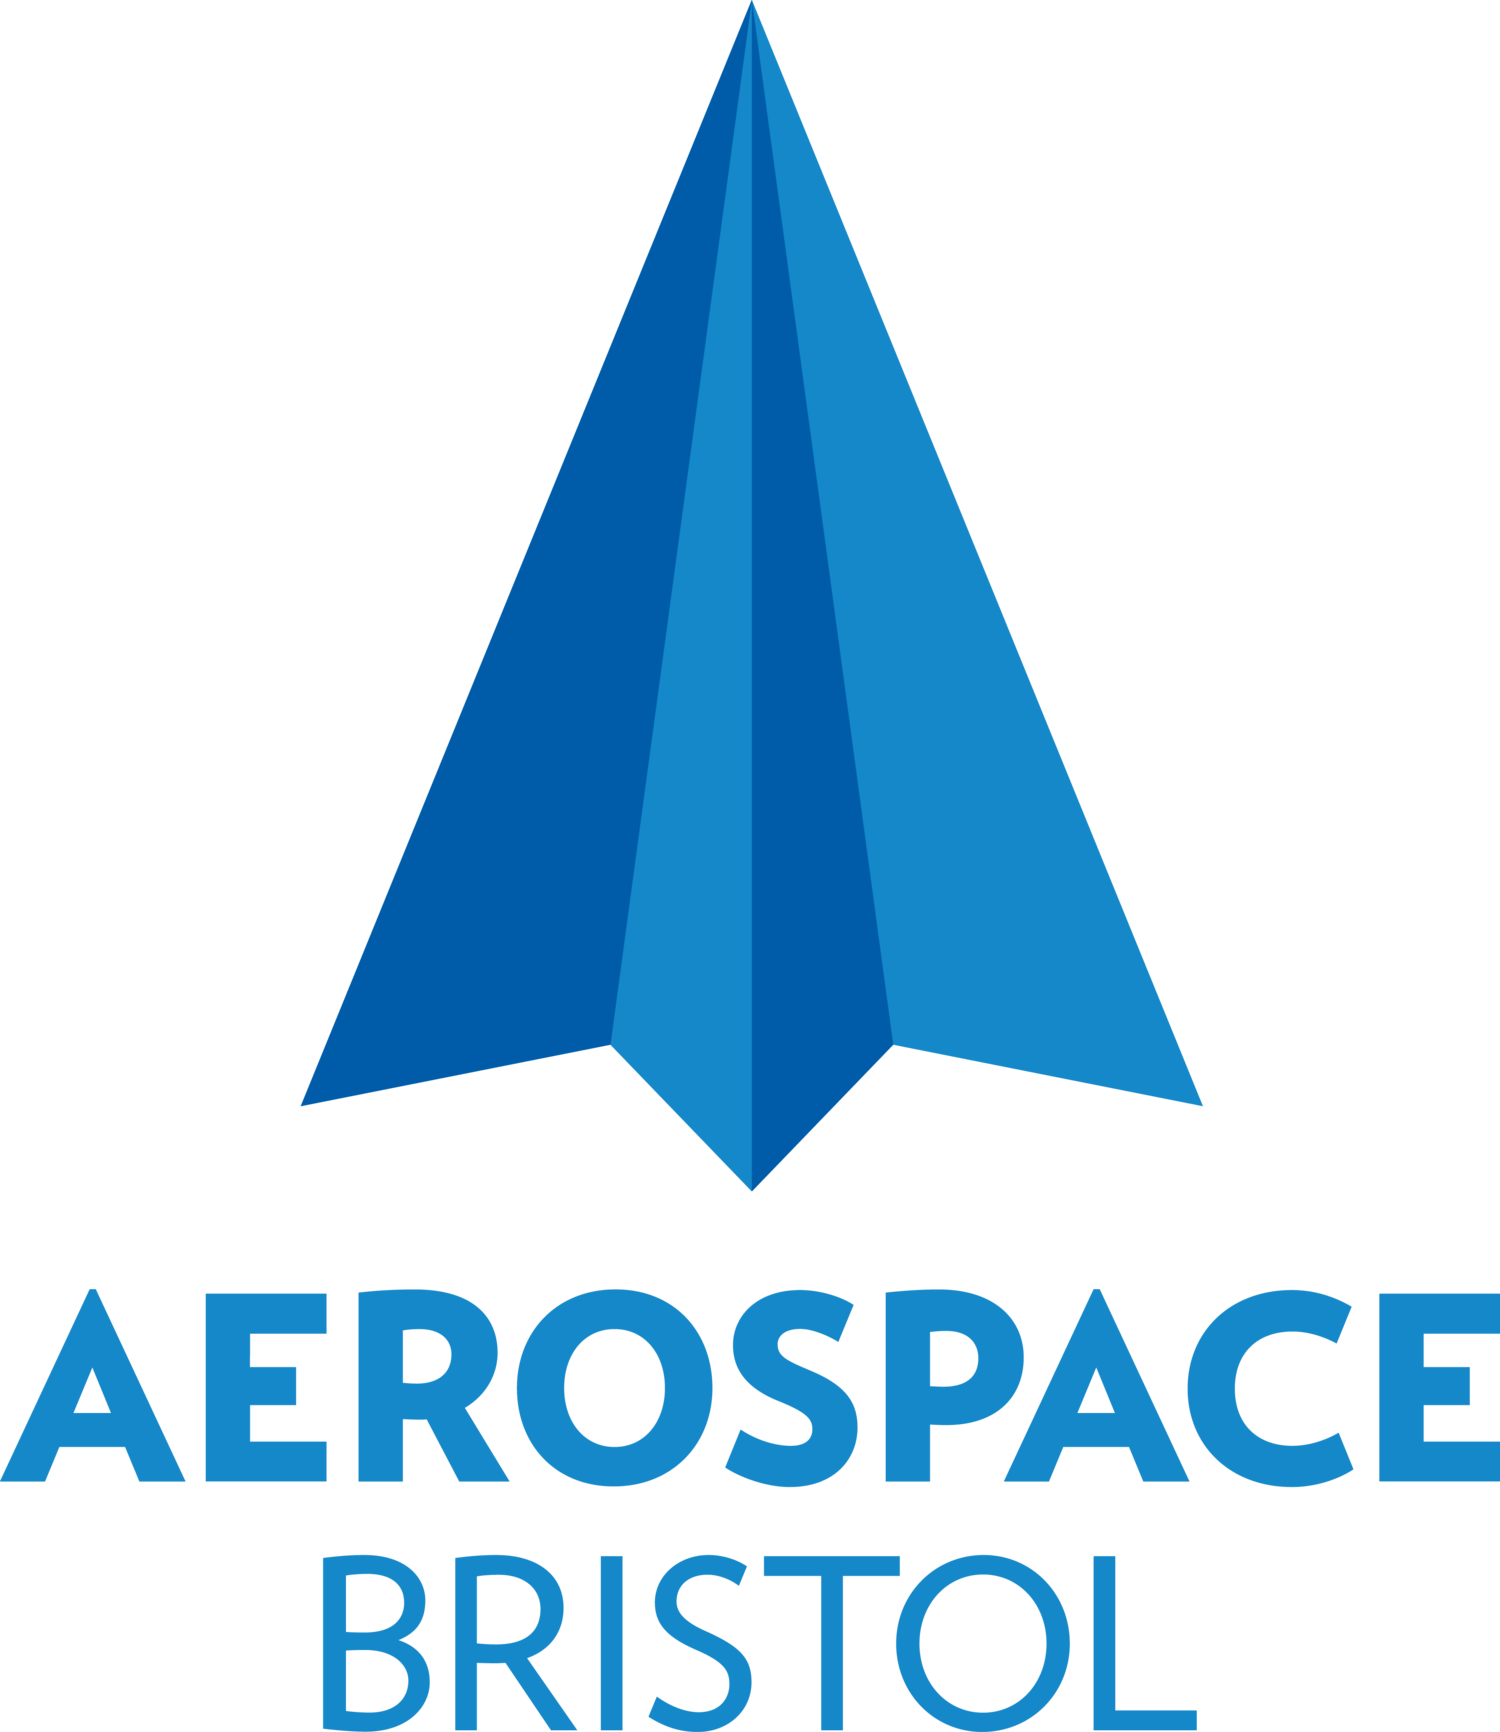 Bristol Aerospace